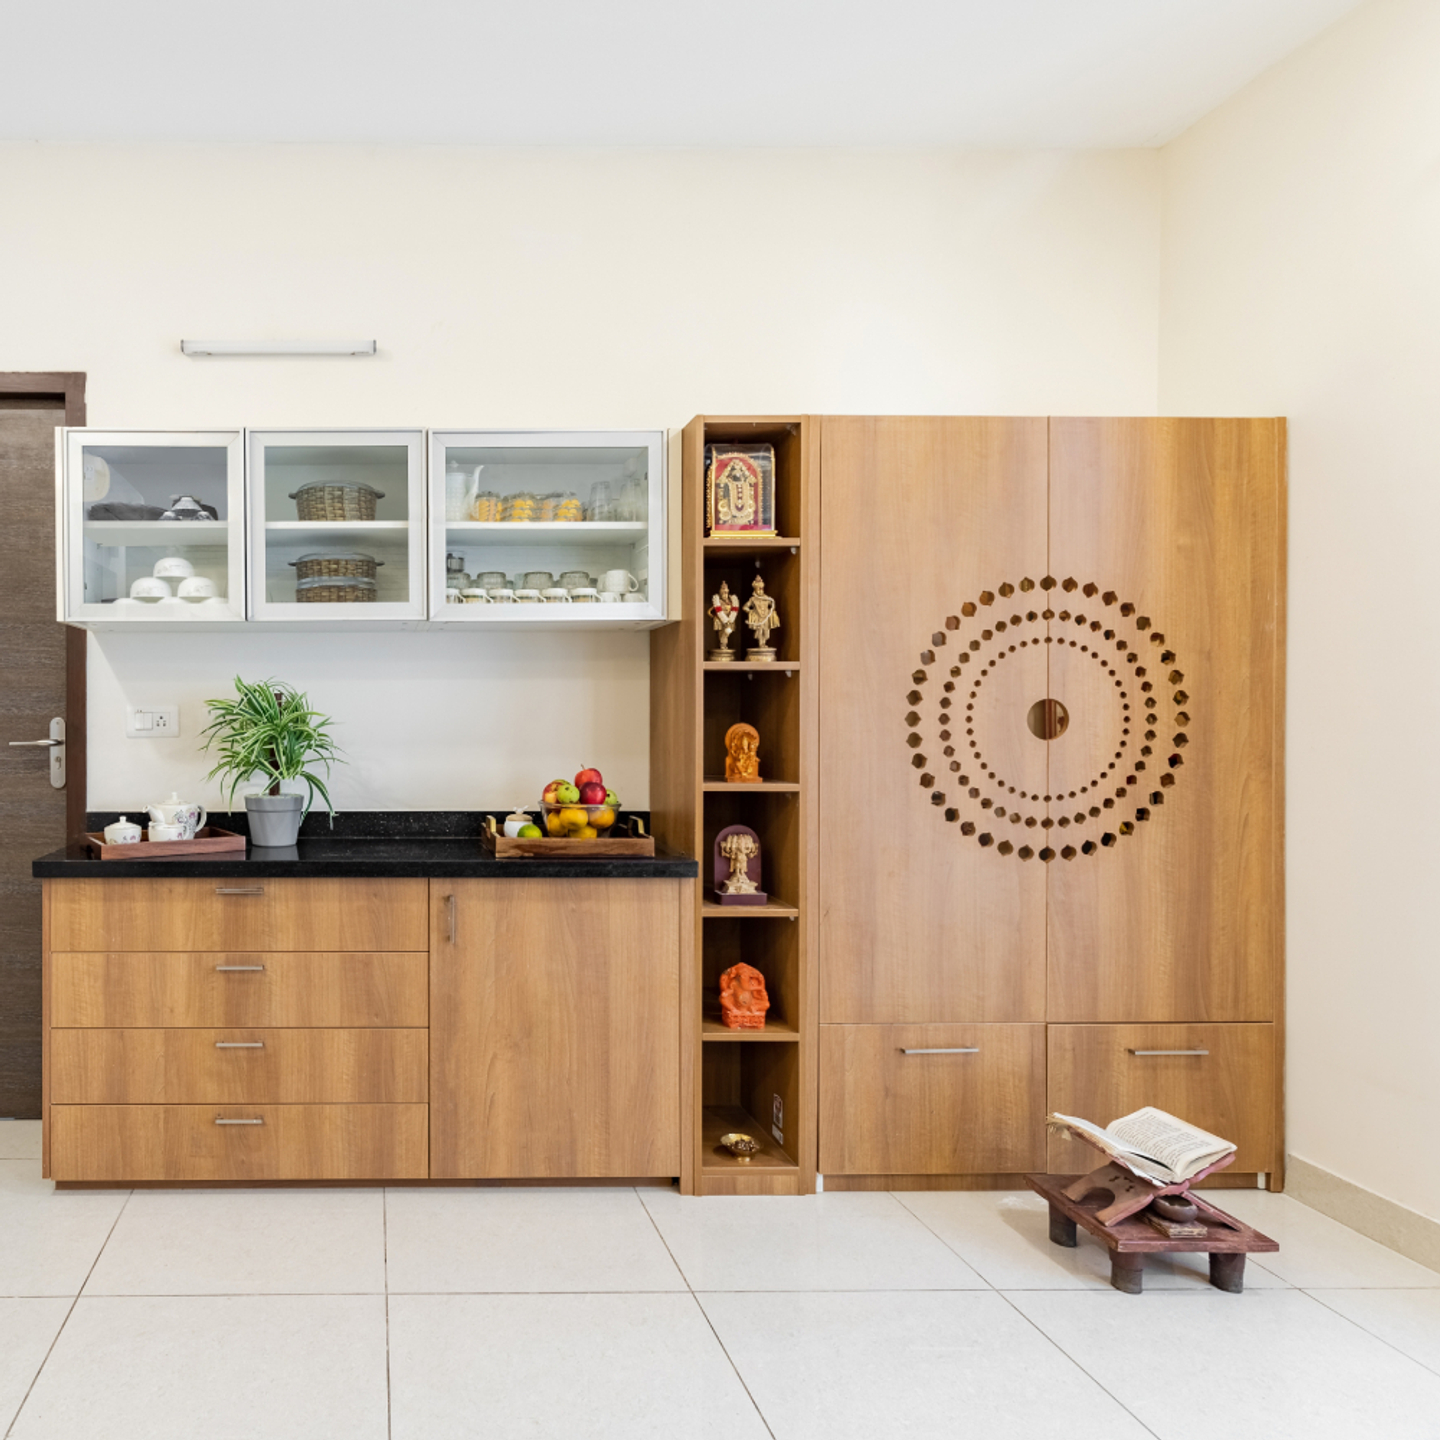 Modern Mandir Design With Wooden Finish - Livspace